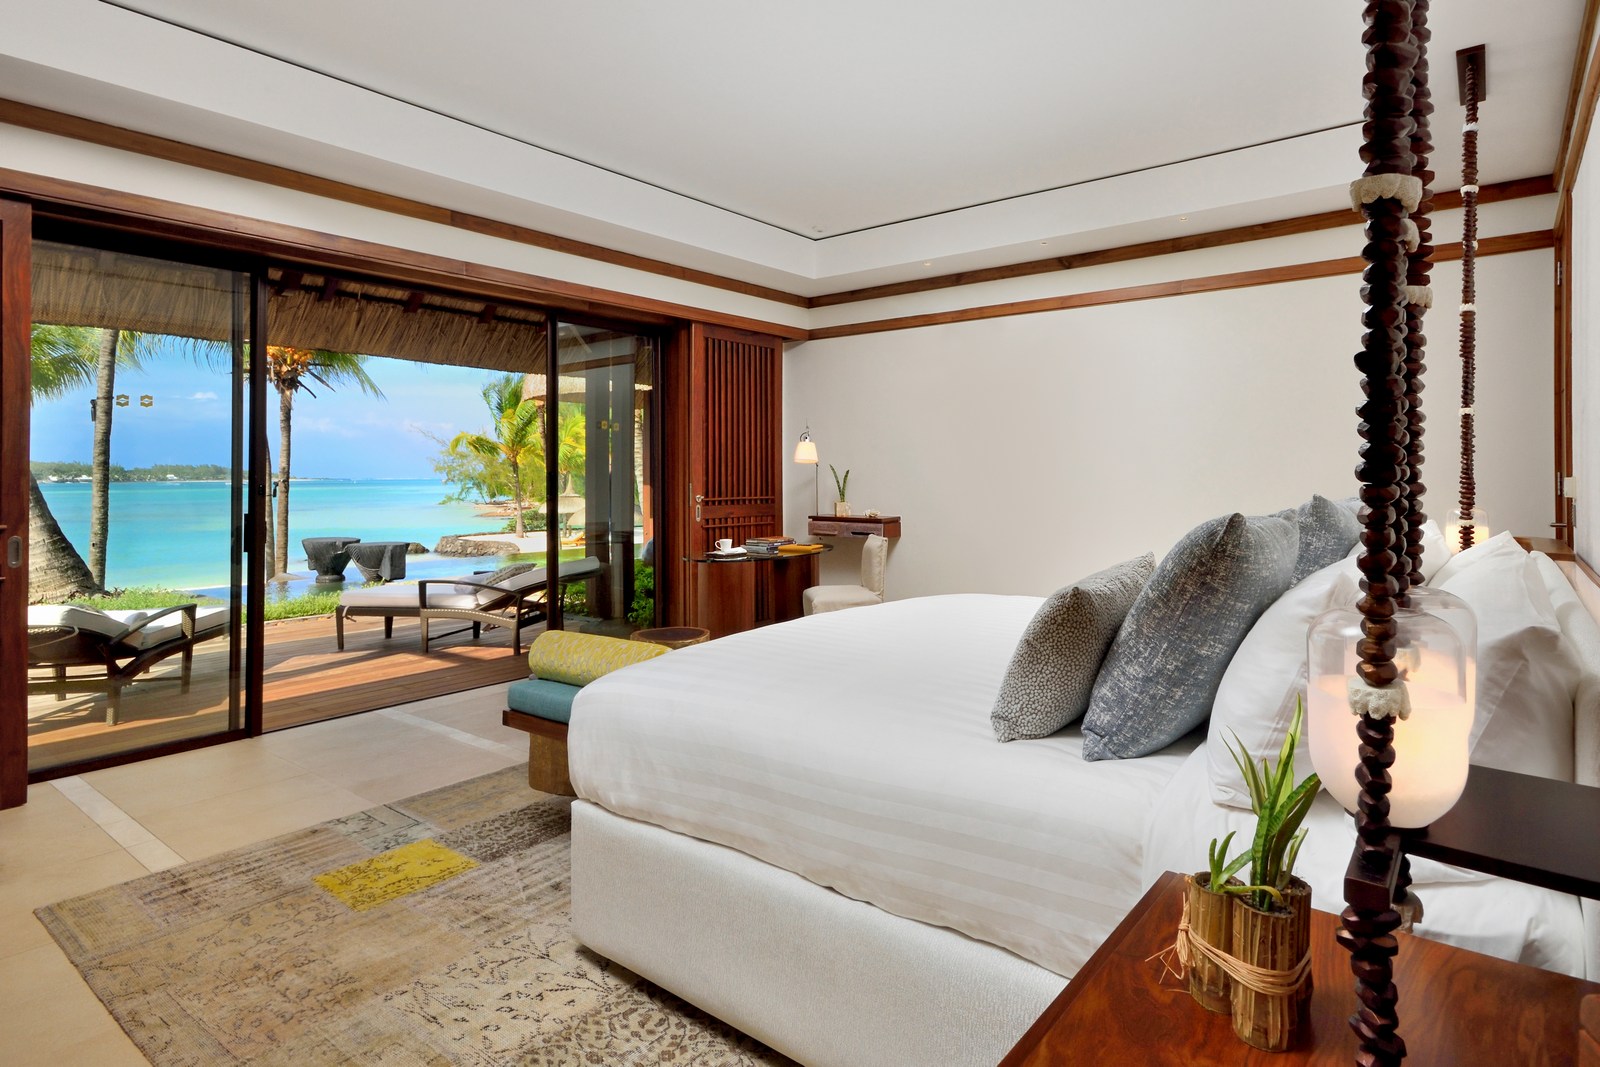 Double bedroom of a beach villa at Shangri La Le Touessrok, Mauritius